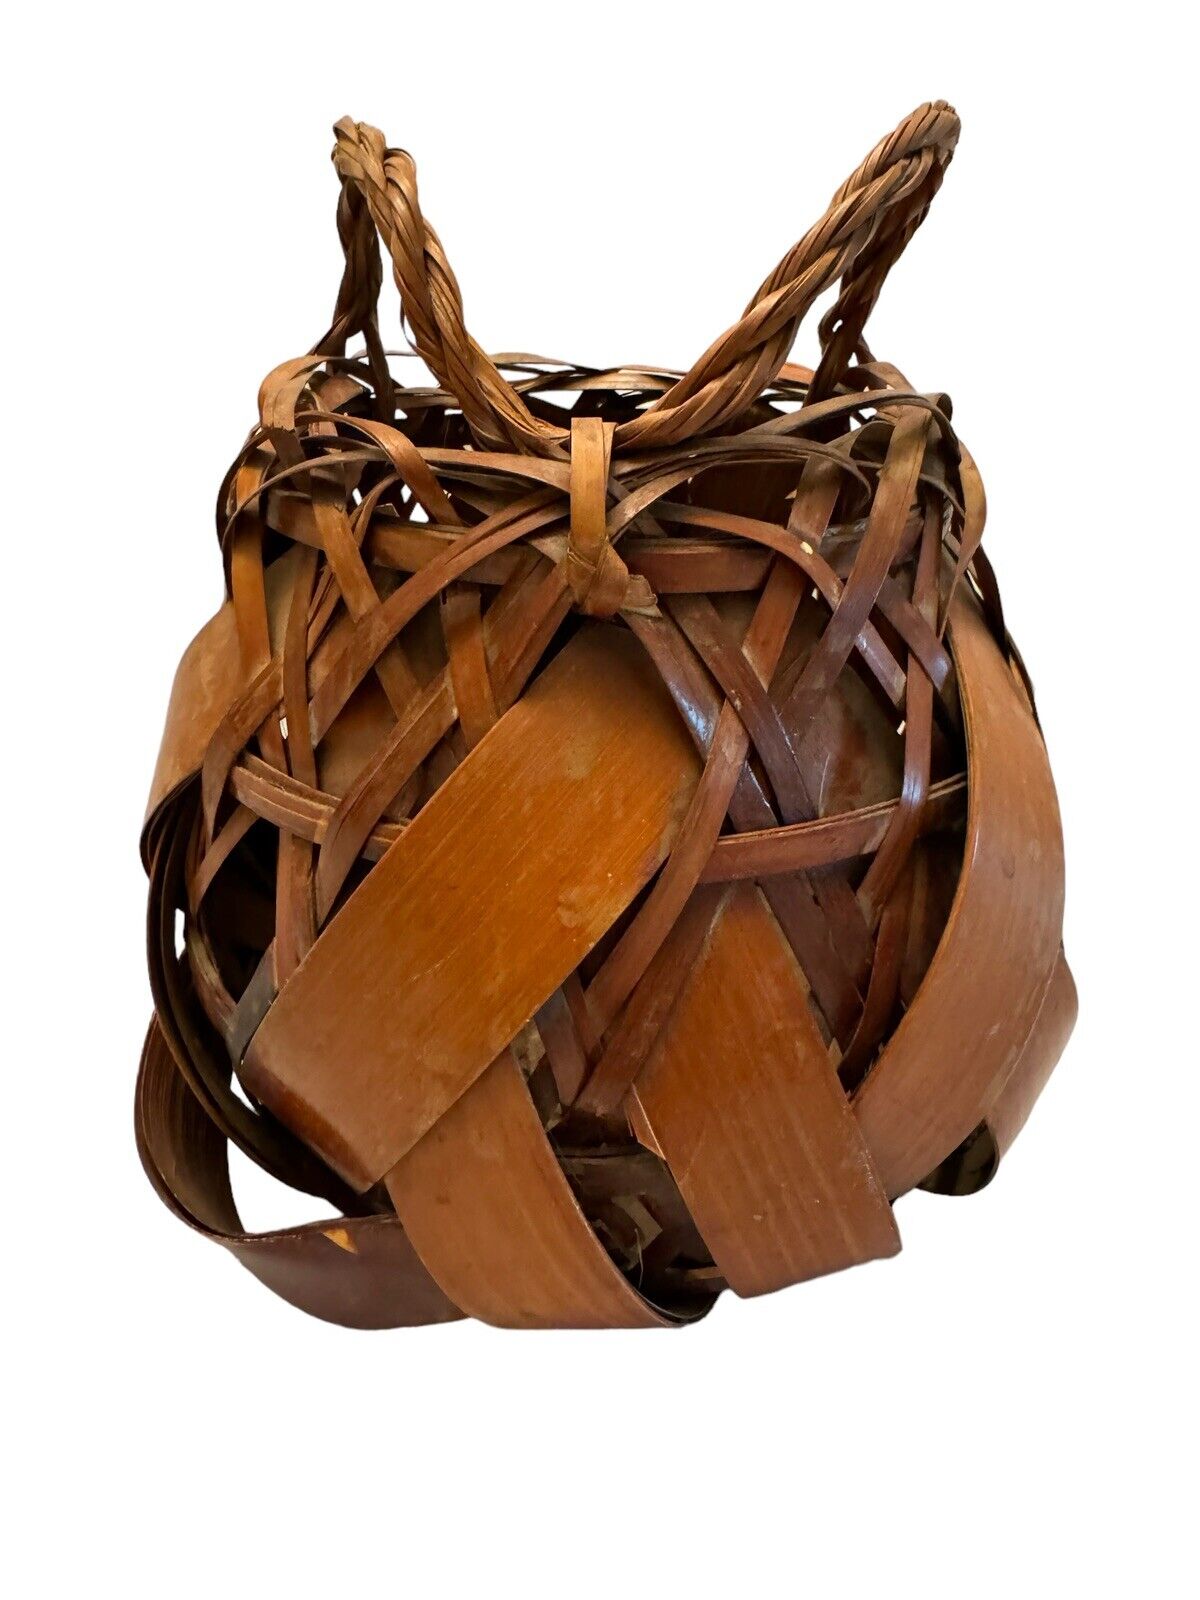 Japanese Ikebana Bamboo Art Basket Vase Weave Handcrafted 8”H x 7”W